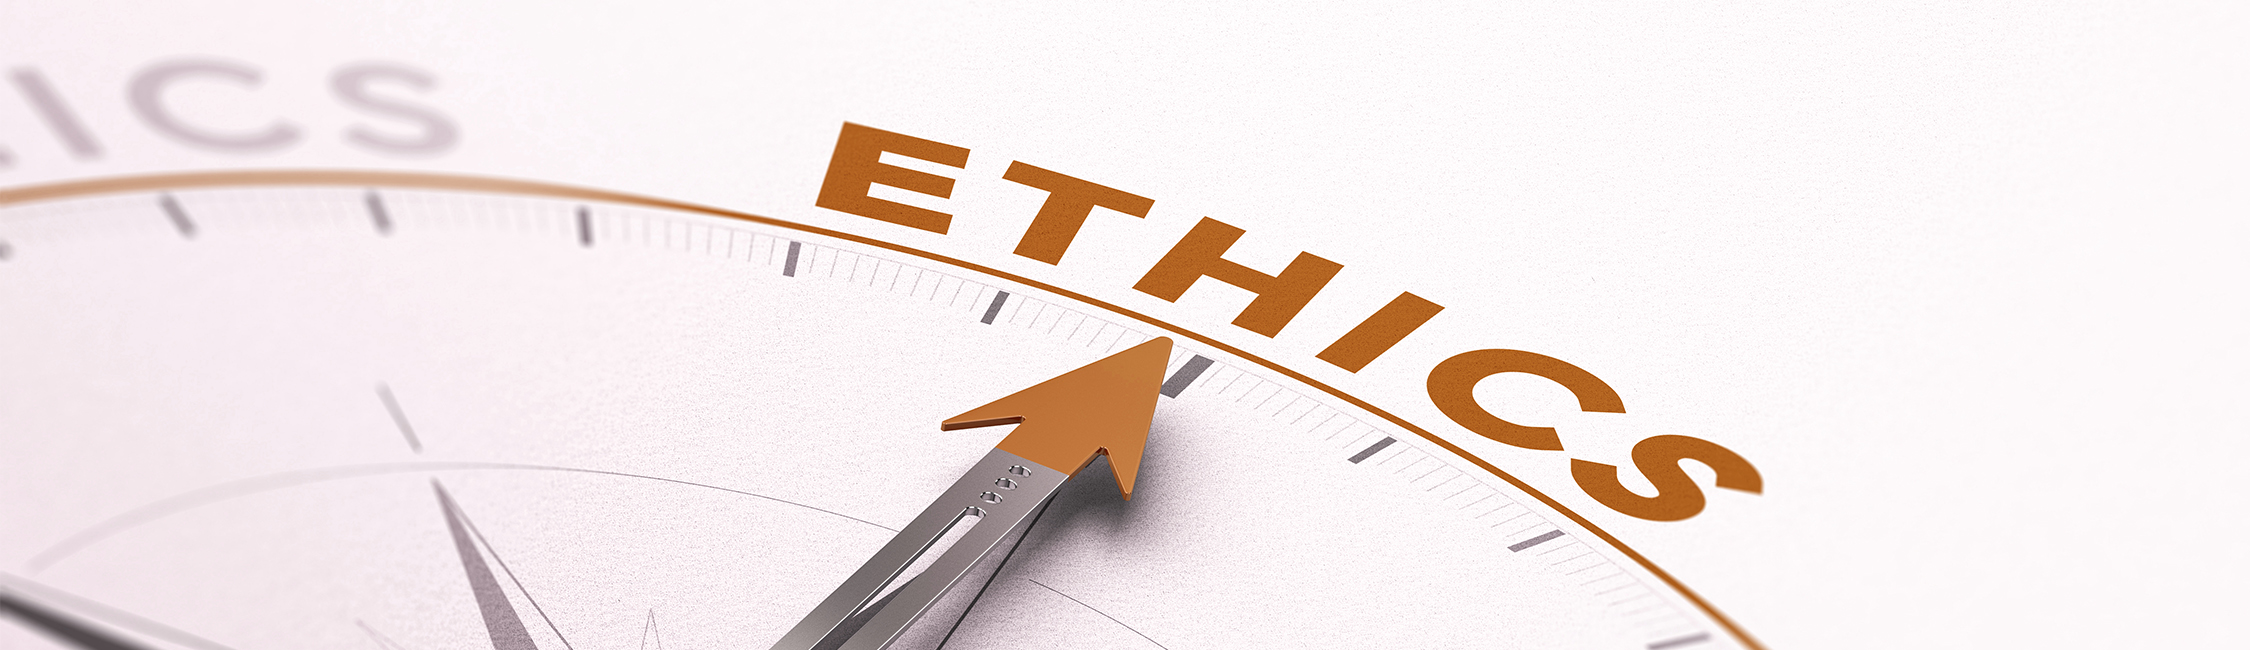 AICPA Code of Conduct ethics webinar